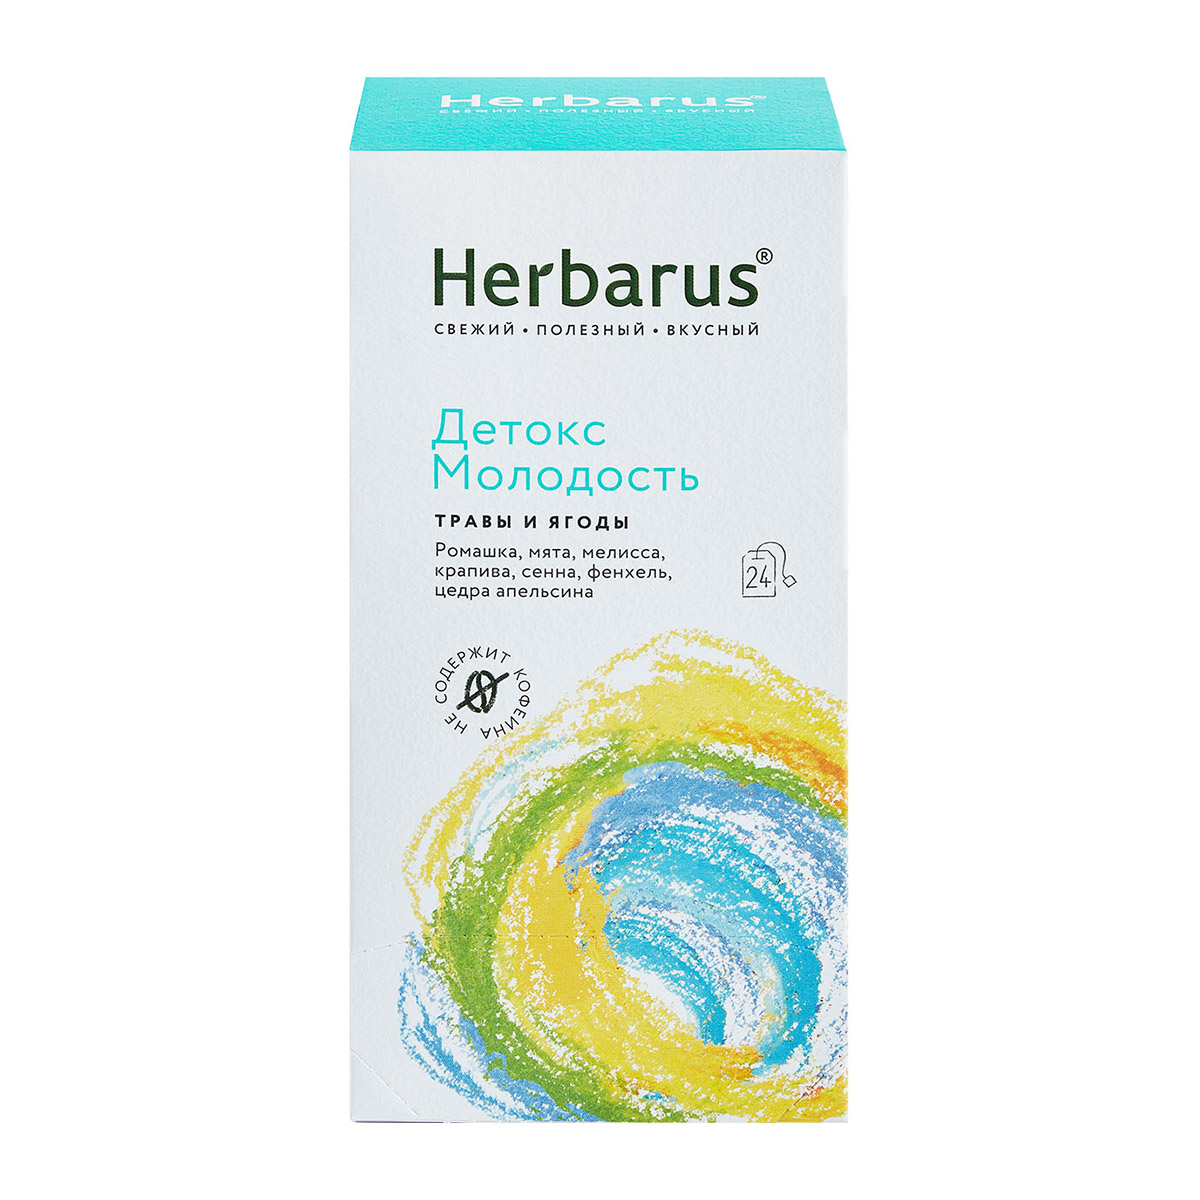 Herbarus Чайный напиток Детокс и молодость, 24 х 1,8 г (Herbarus, Травы и ягоды)